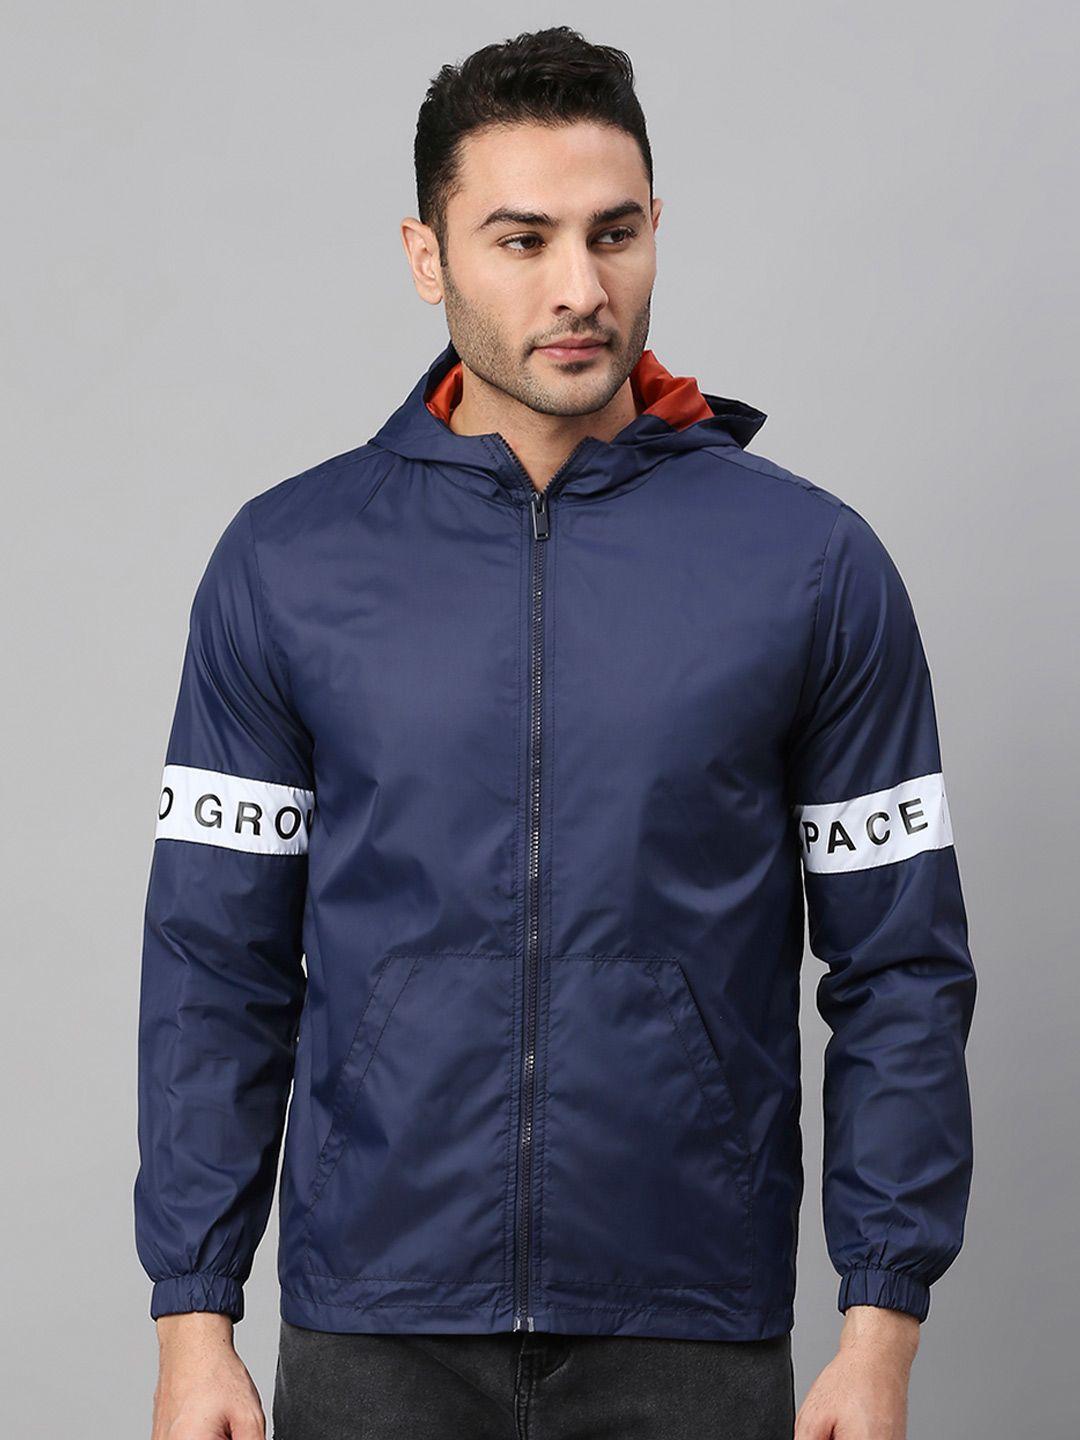 dennis lingo men navy blue & white lightweight open front jacket